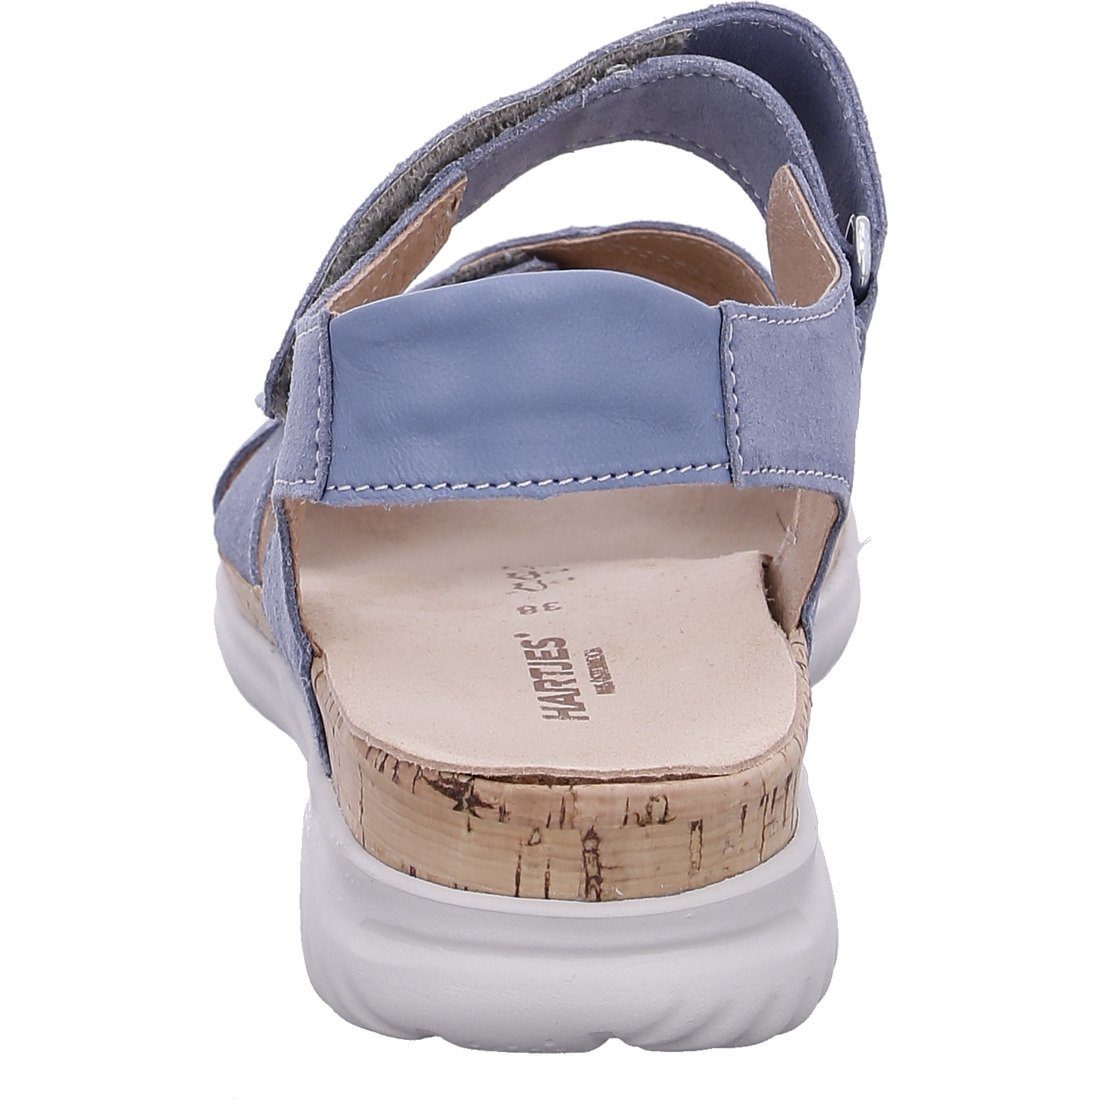 Schuhe, Hartjes blau Sandalette - Sandalette Velours 048731 Hartjes Breeze